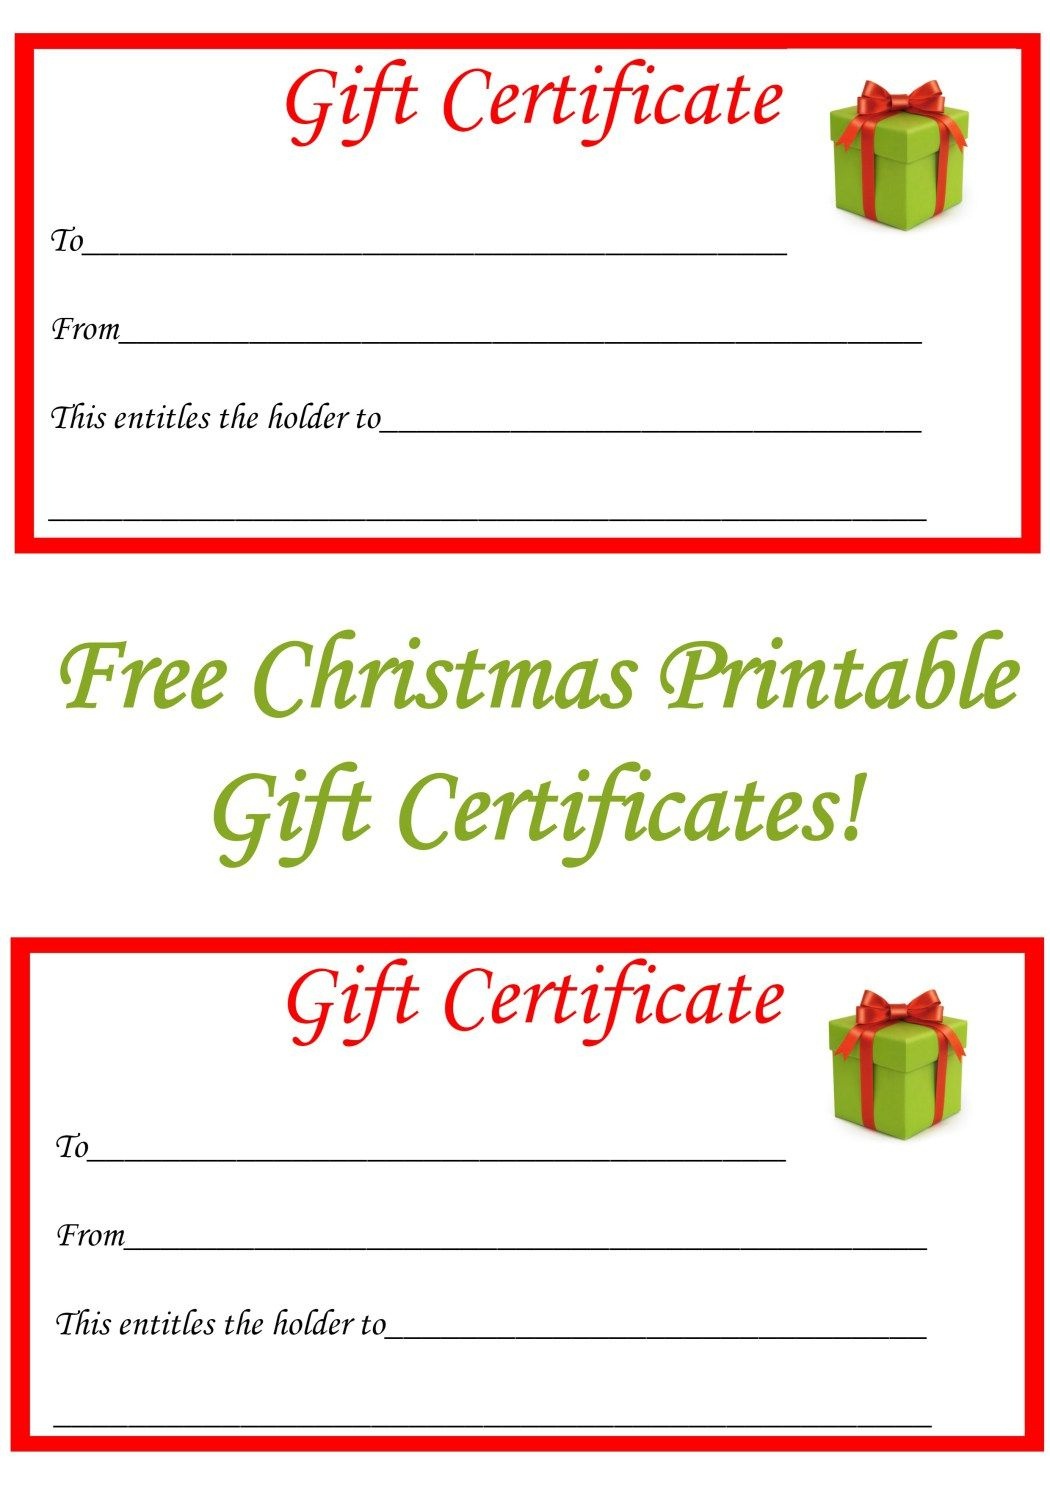 Free Christmas Printable Gift Certificates | Gift Ideas | Christmas - Free Printable Gift Certificates